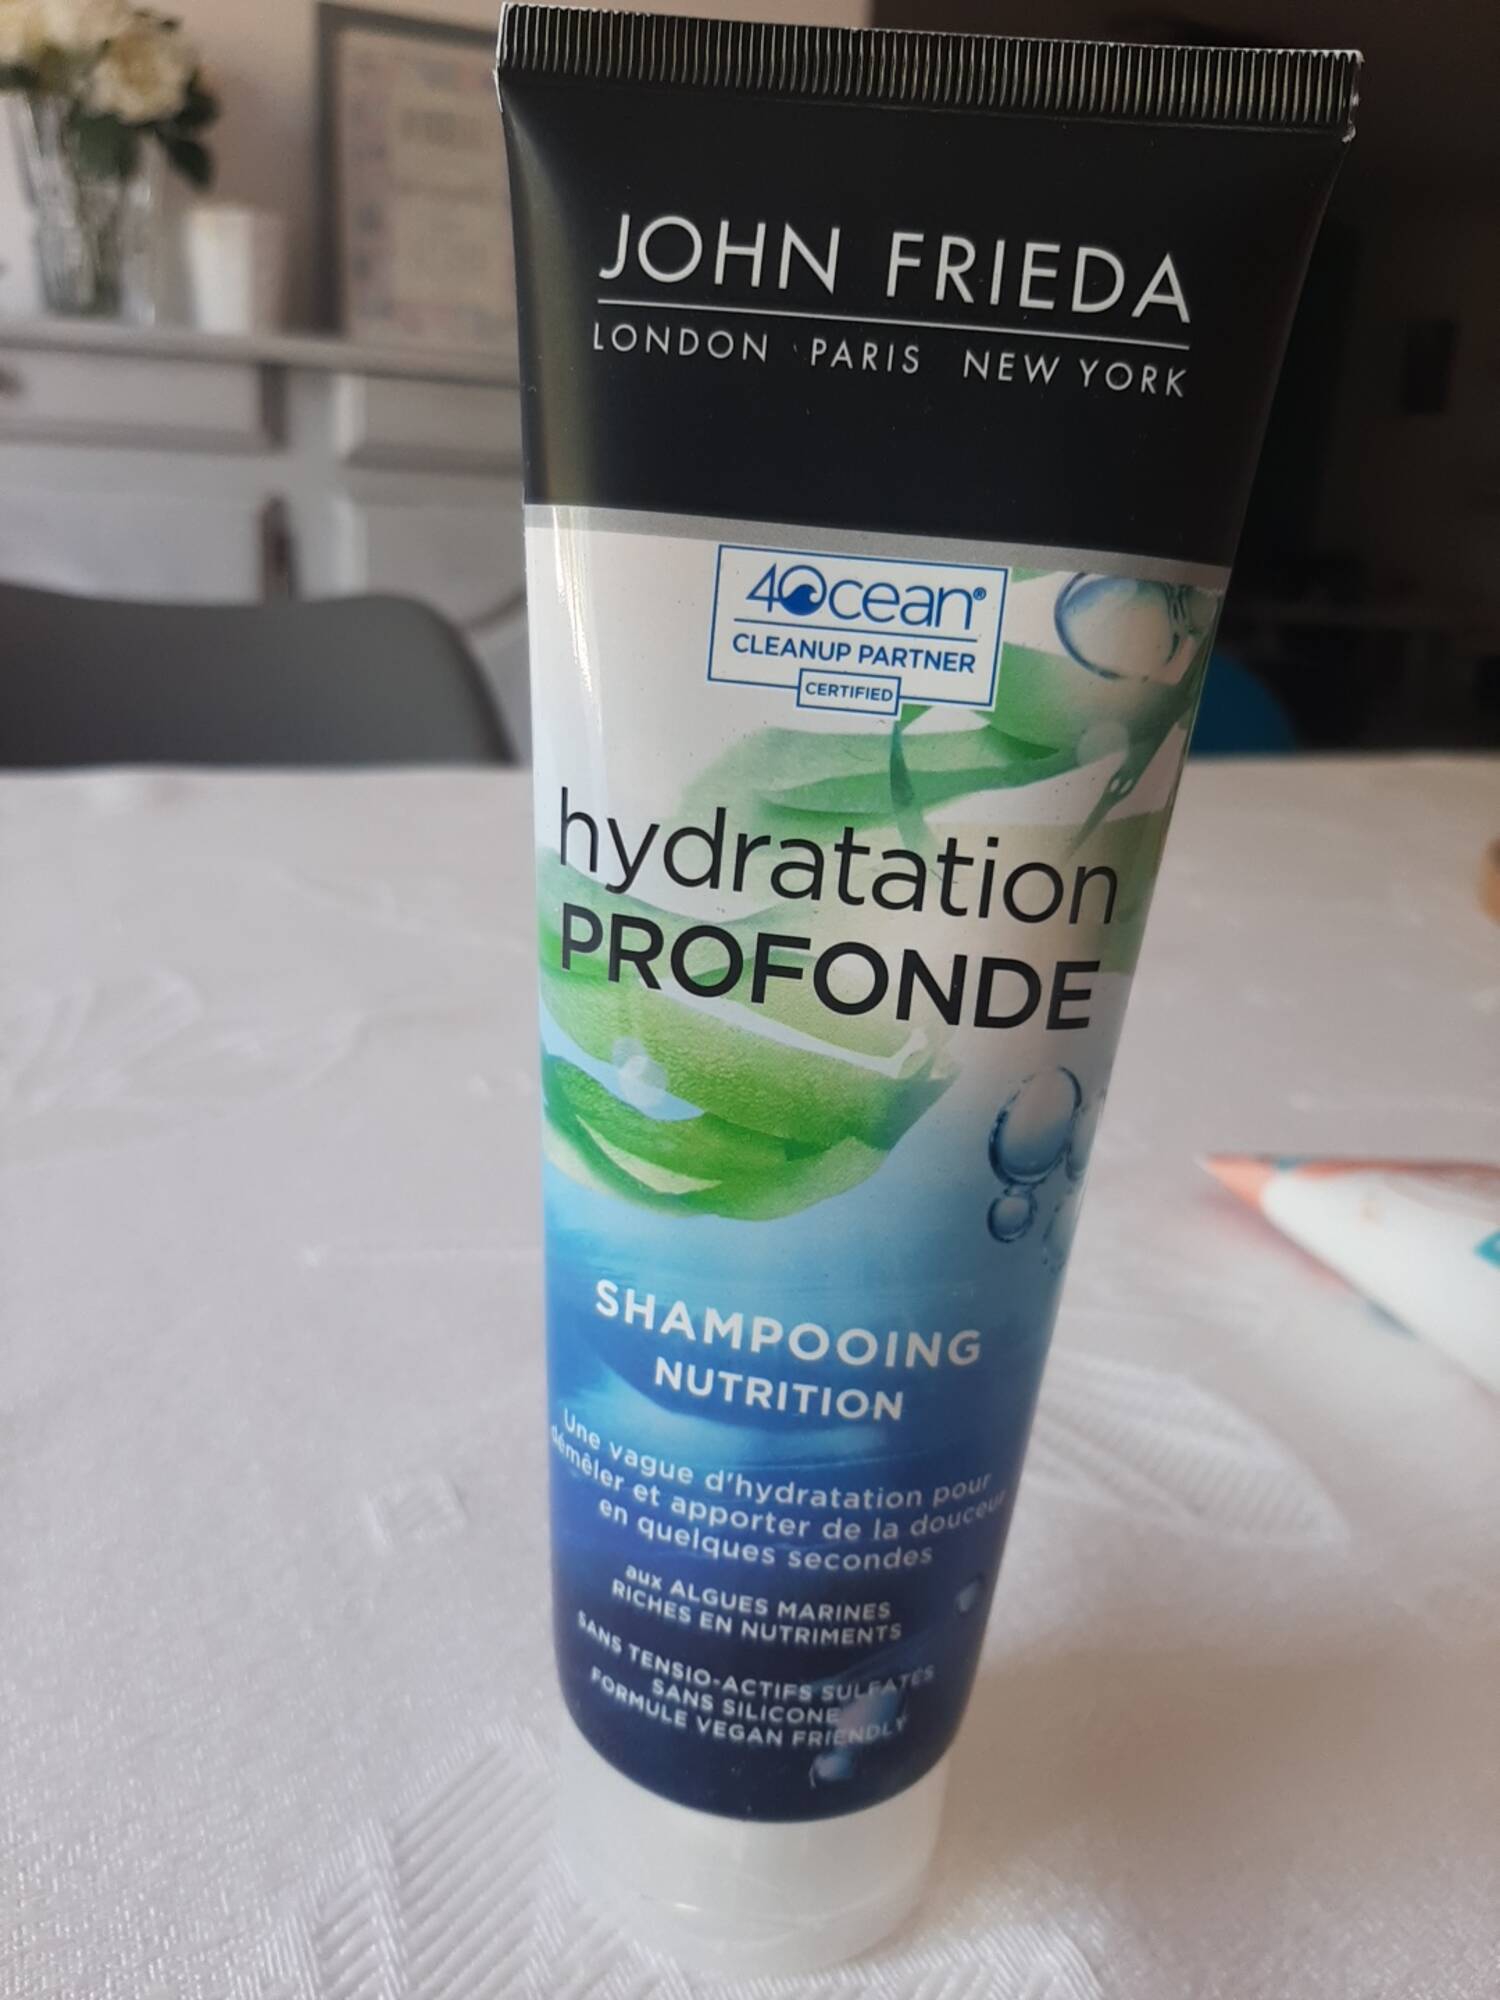 JOHN FRIEDA - Hydratation profonde - Shampooing nutrition